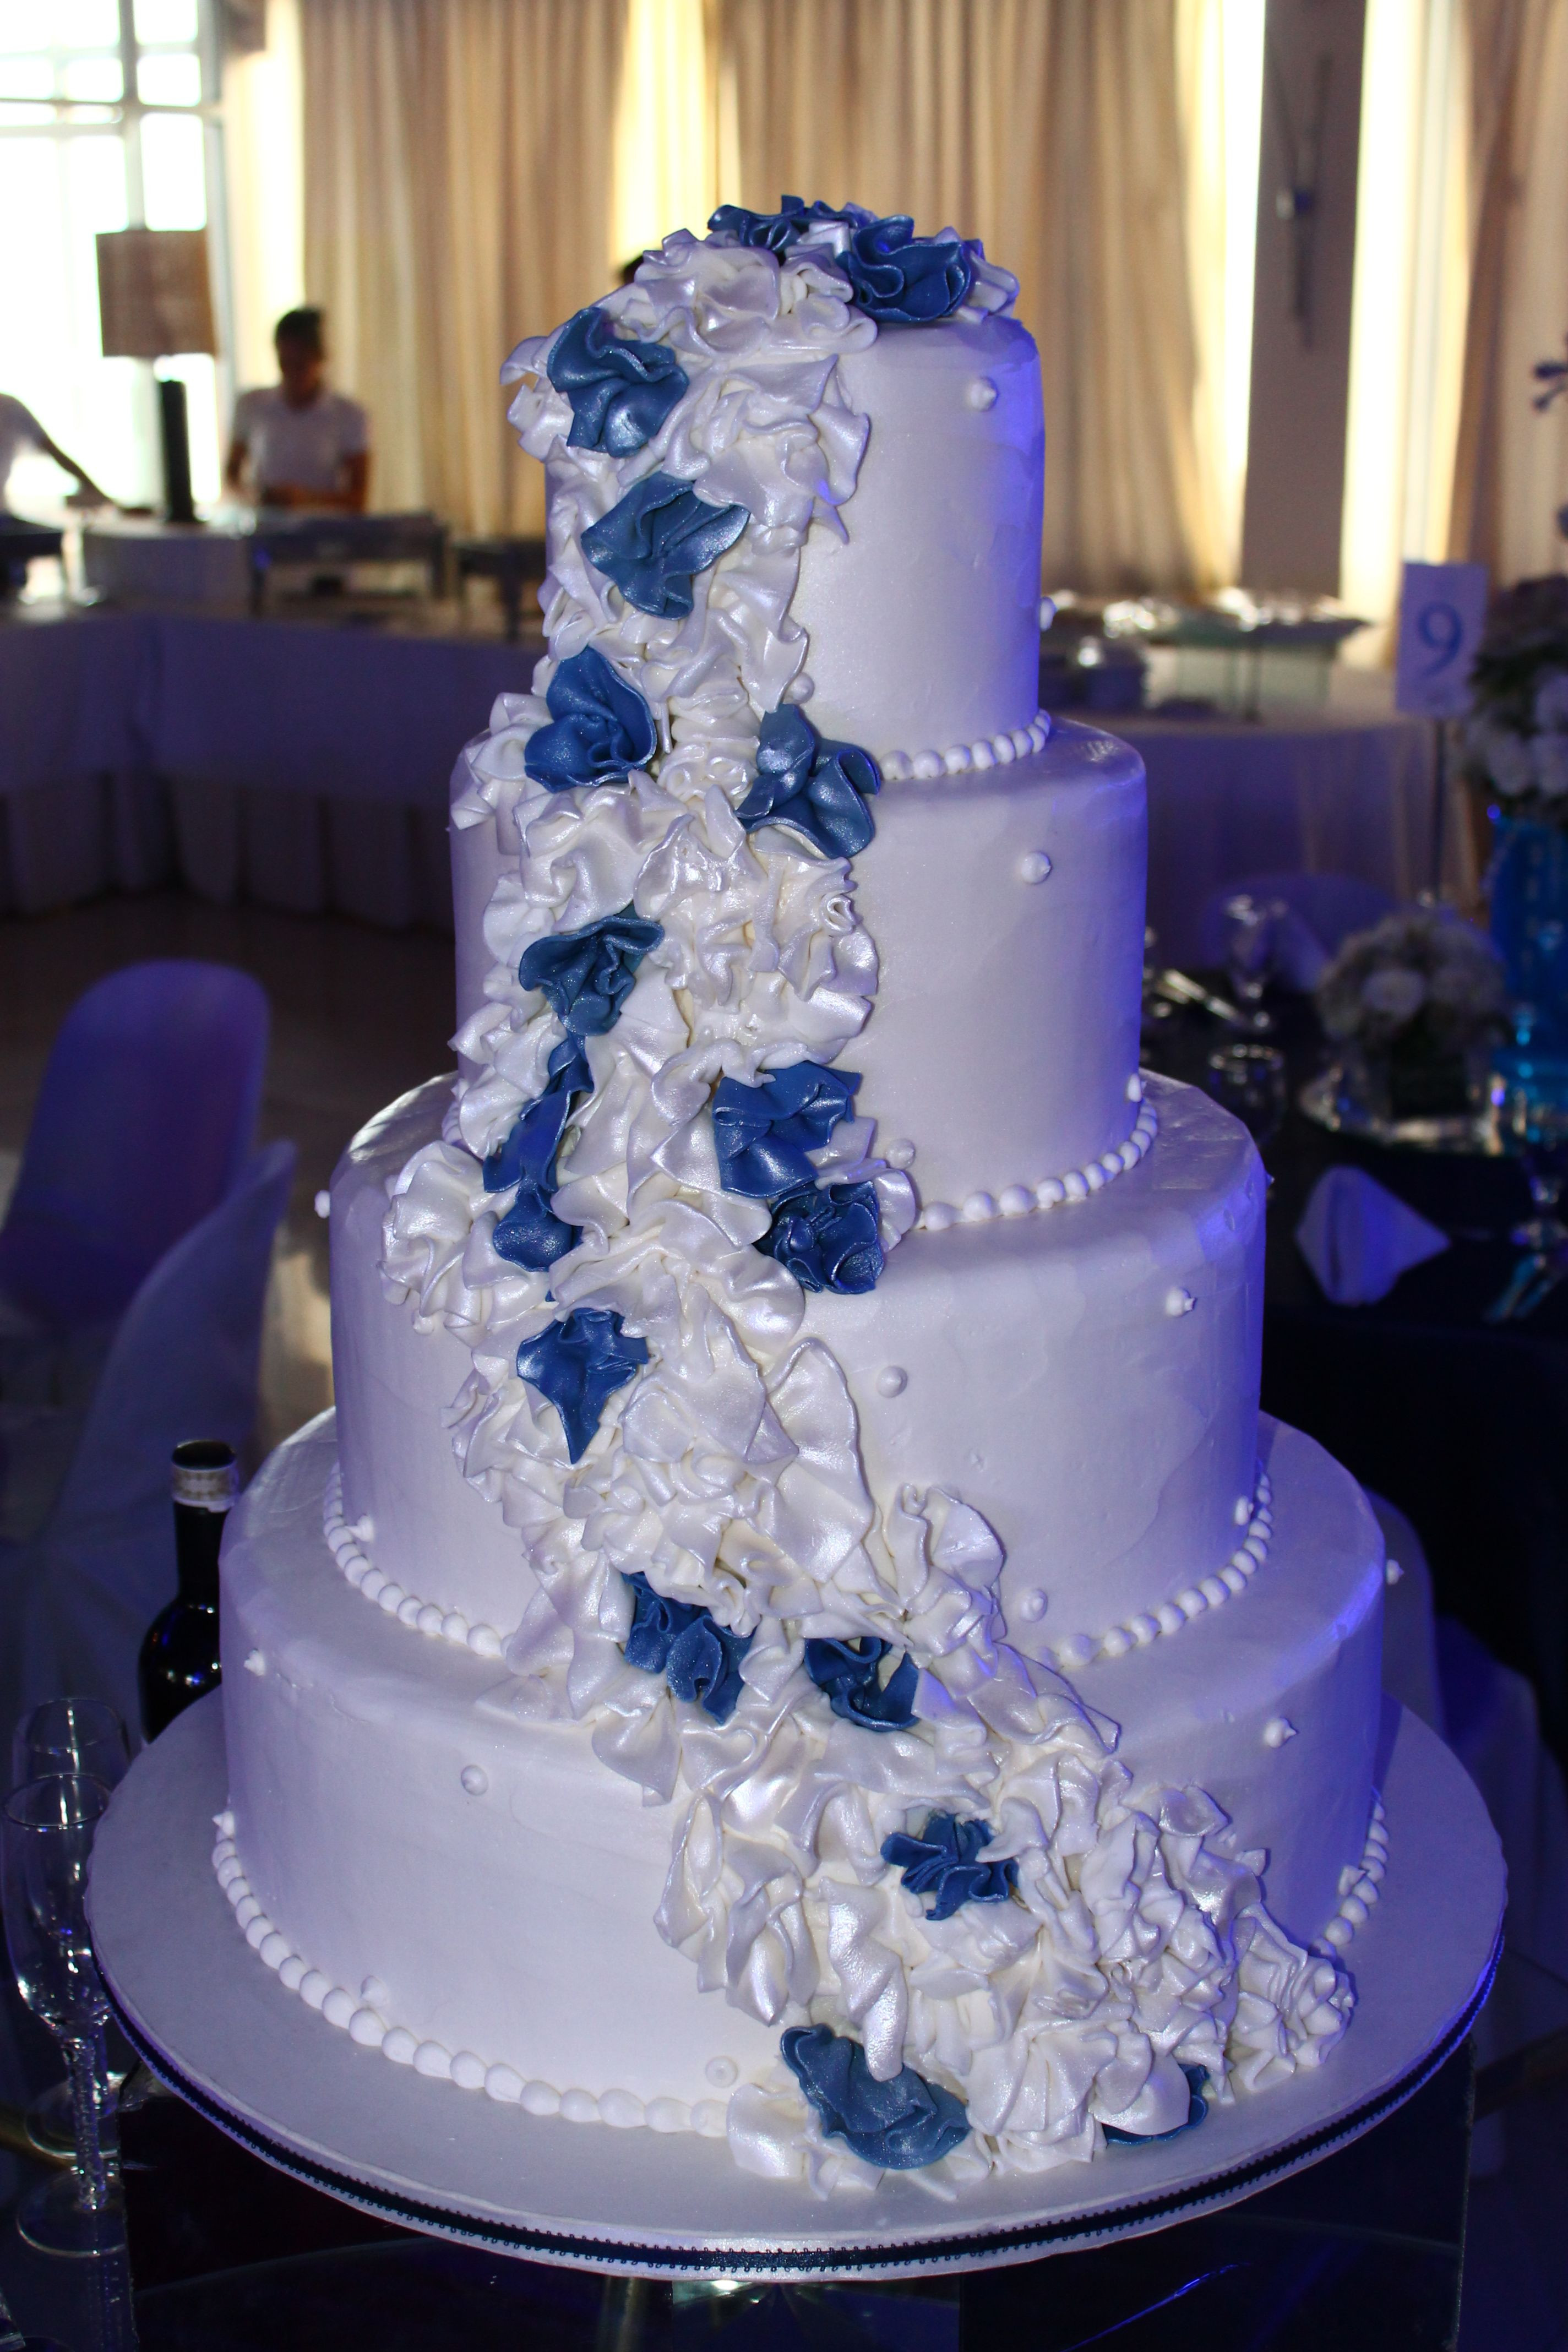 4 Layered Wedding Cakes
 4 layer white wedding cake with cascading white and navy